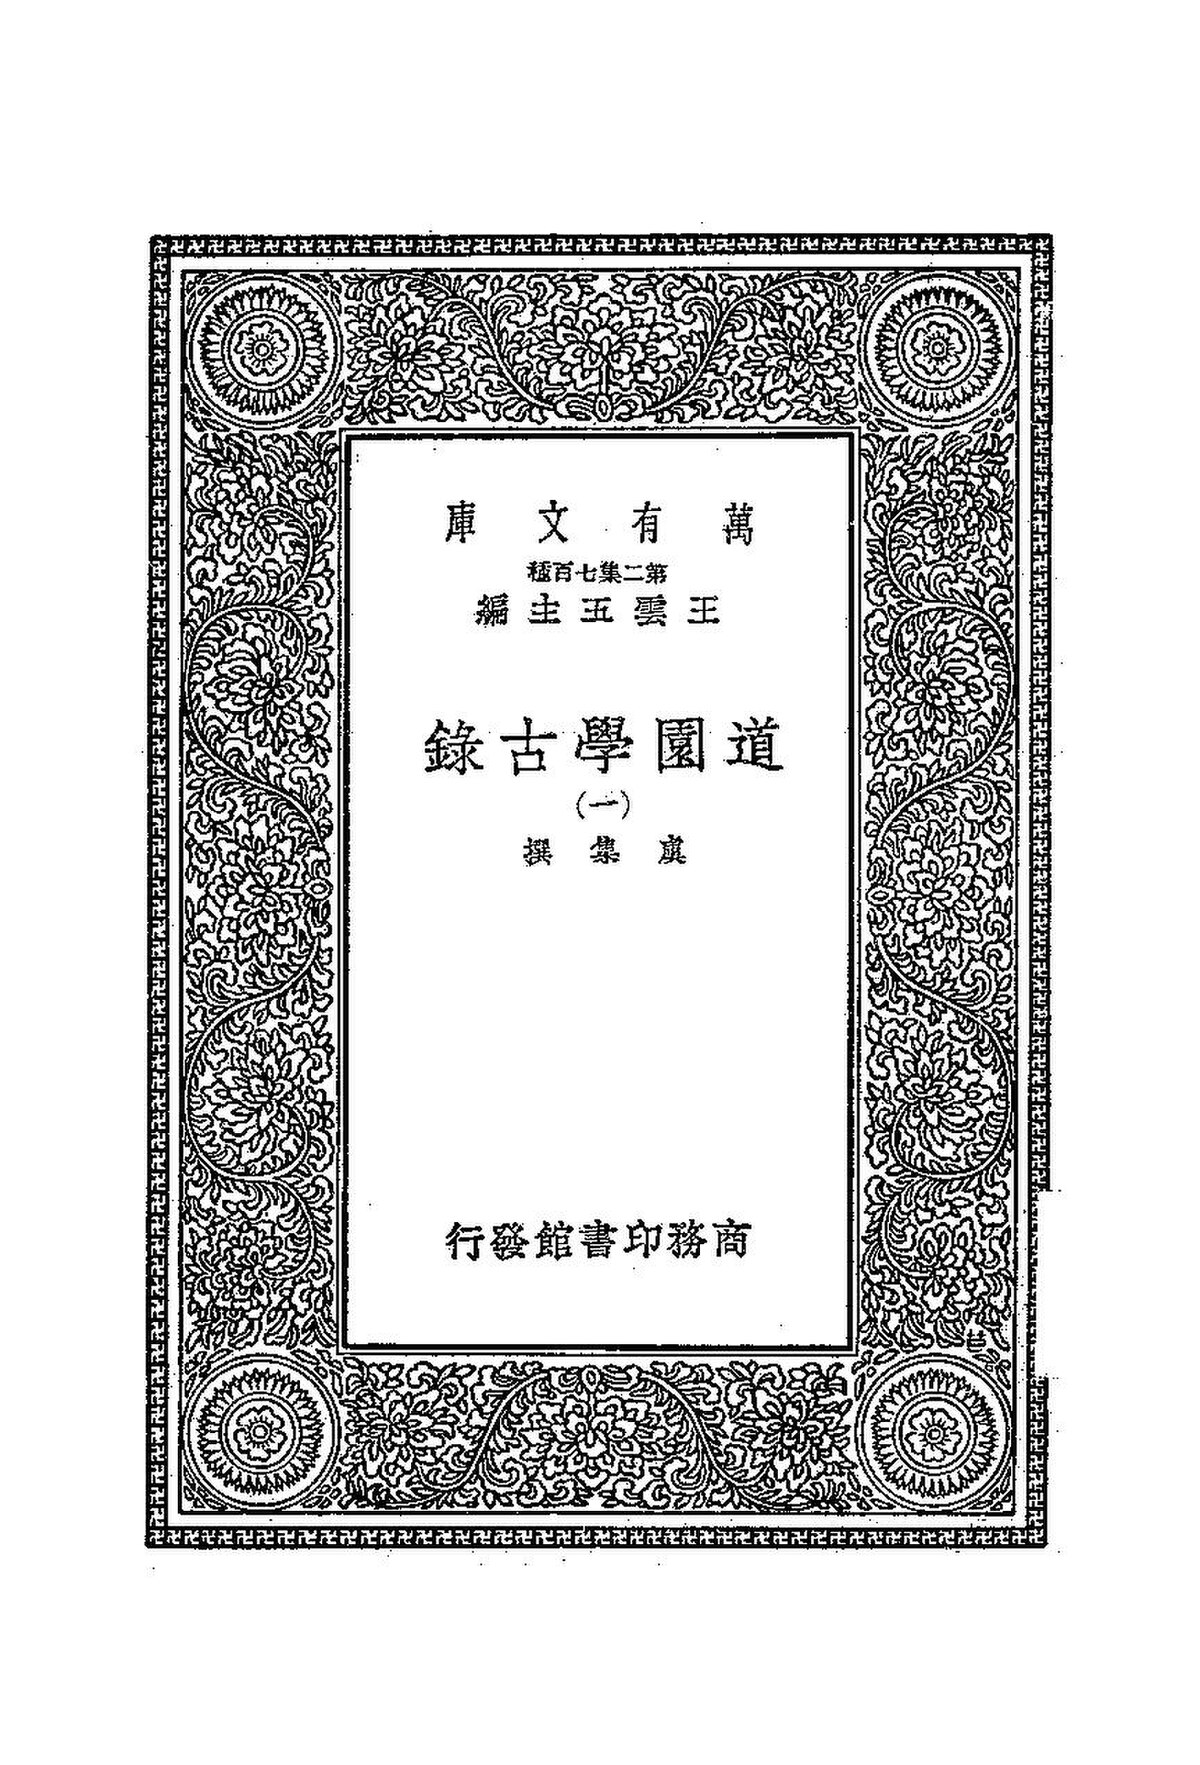 File:NLCjh 道園學古錄.pdf   Wikimedia Commons